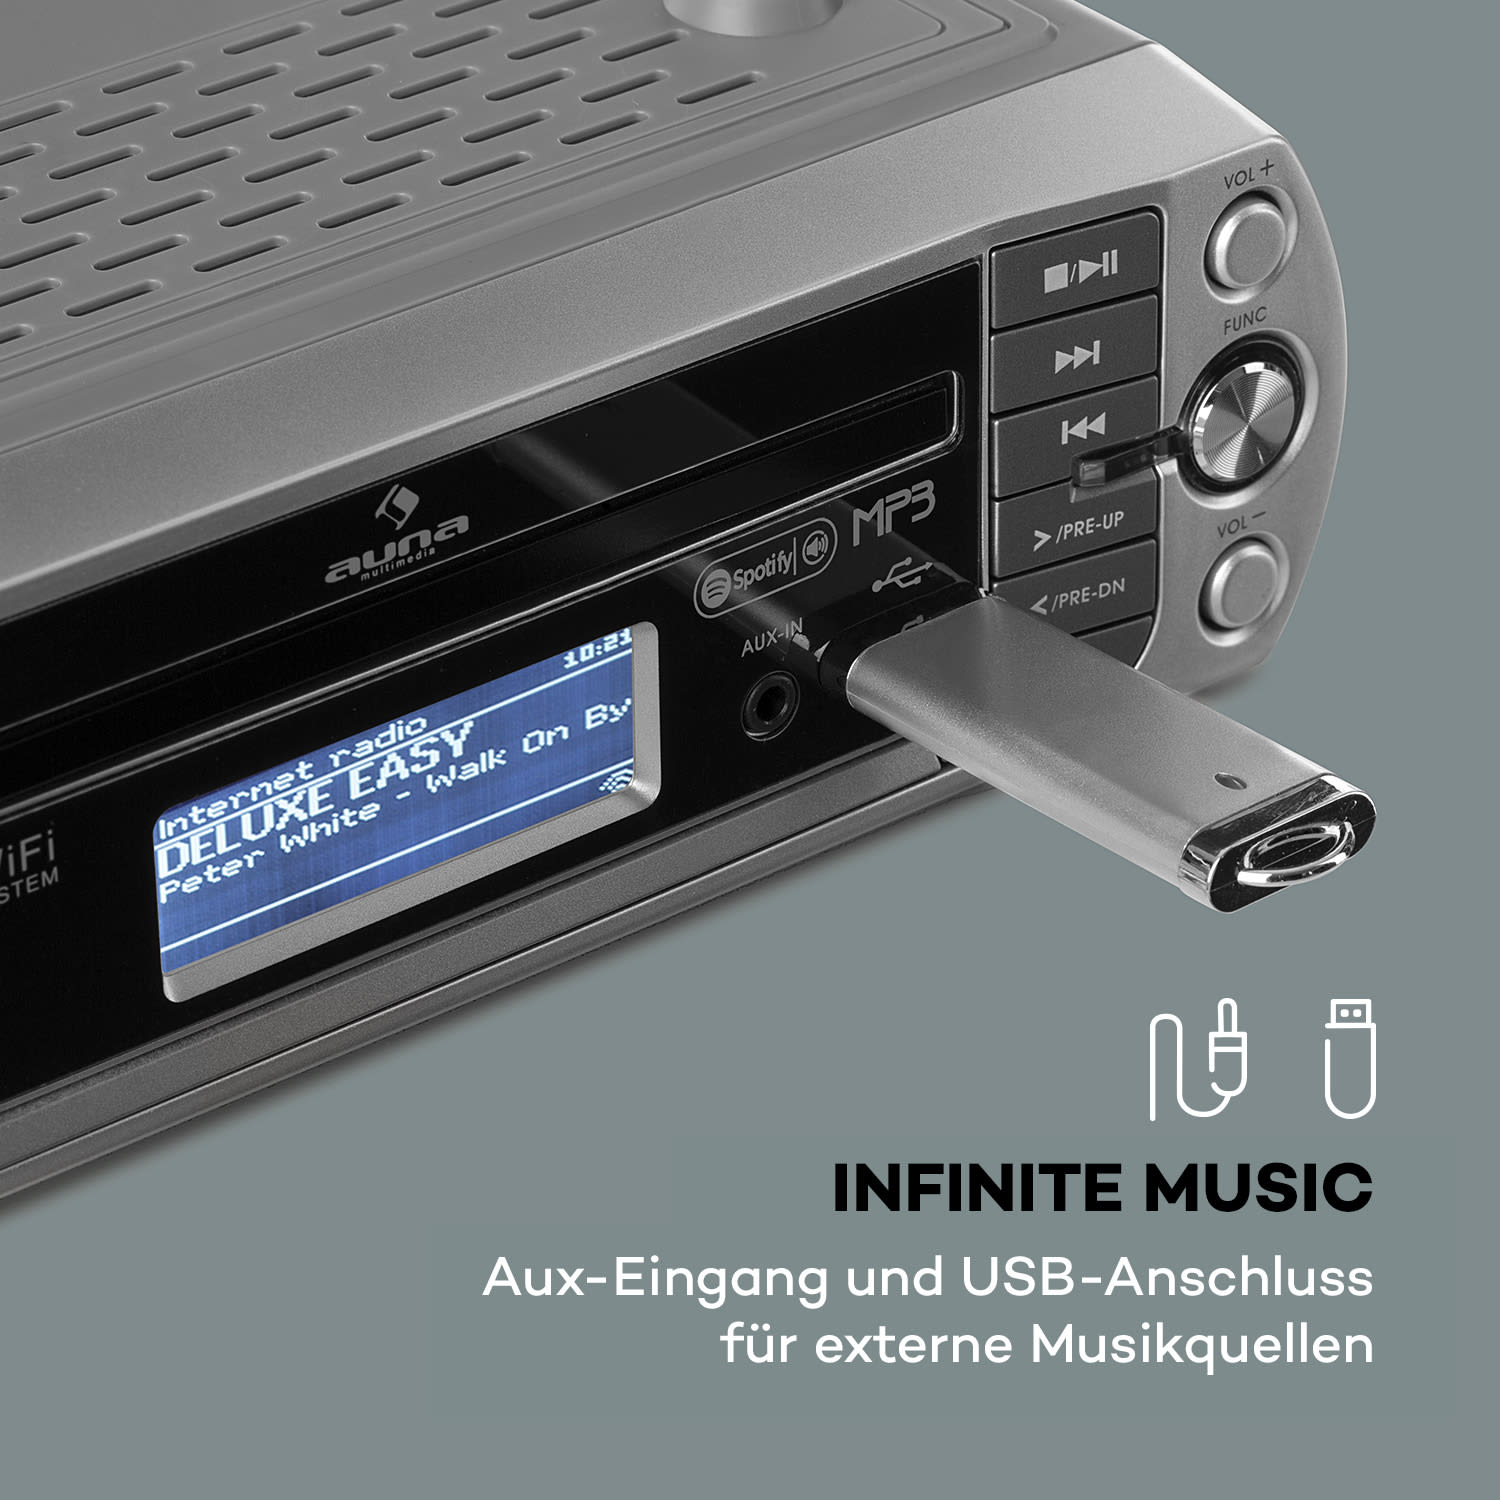 AUNA KR-500 CD Küchenradio, Silber Internetradio, Radio, Internet